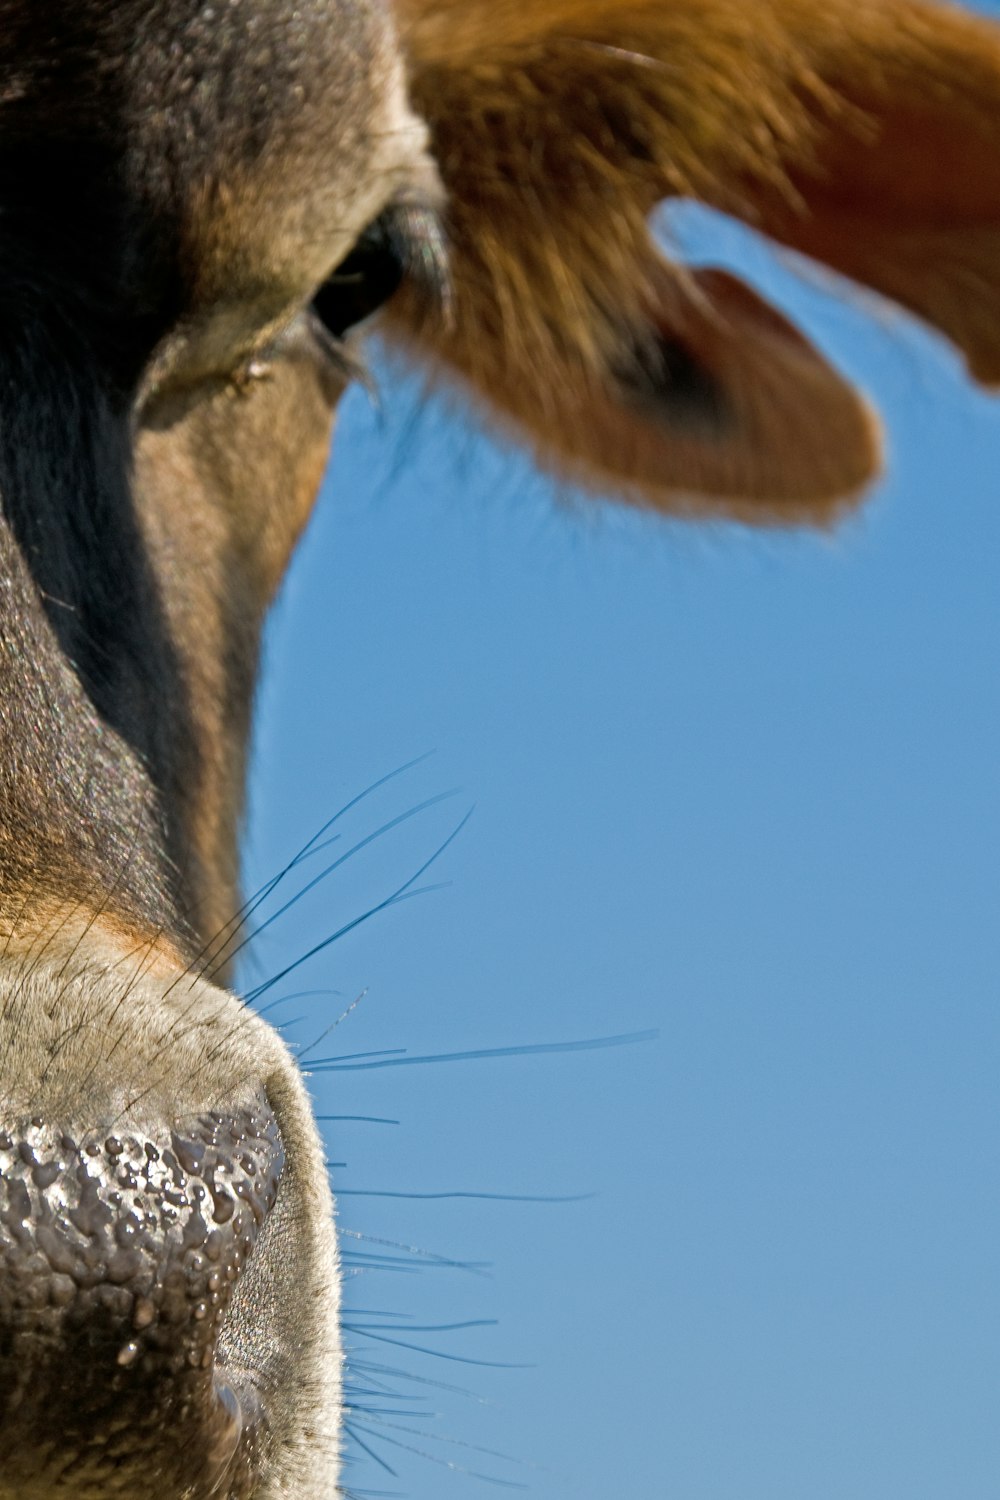 a close up of a cow's nose against a blue sky